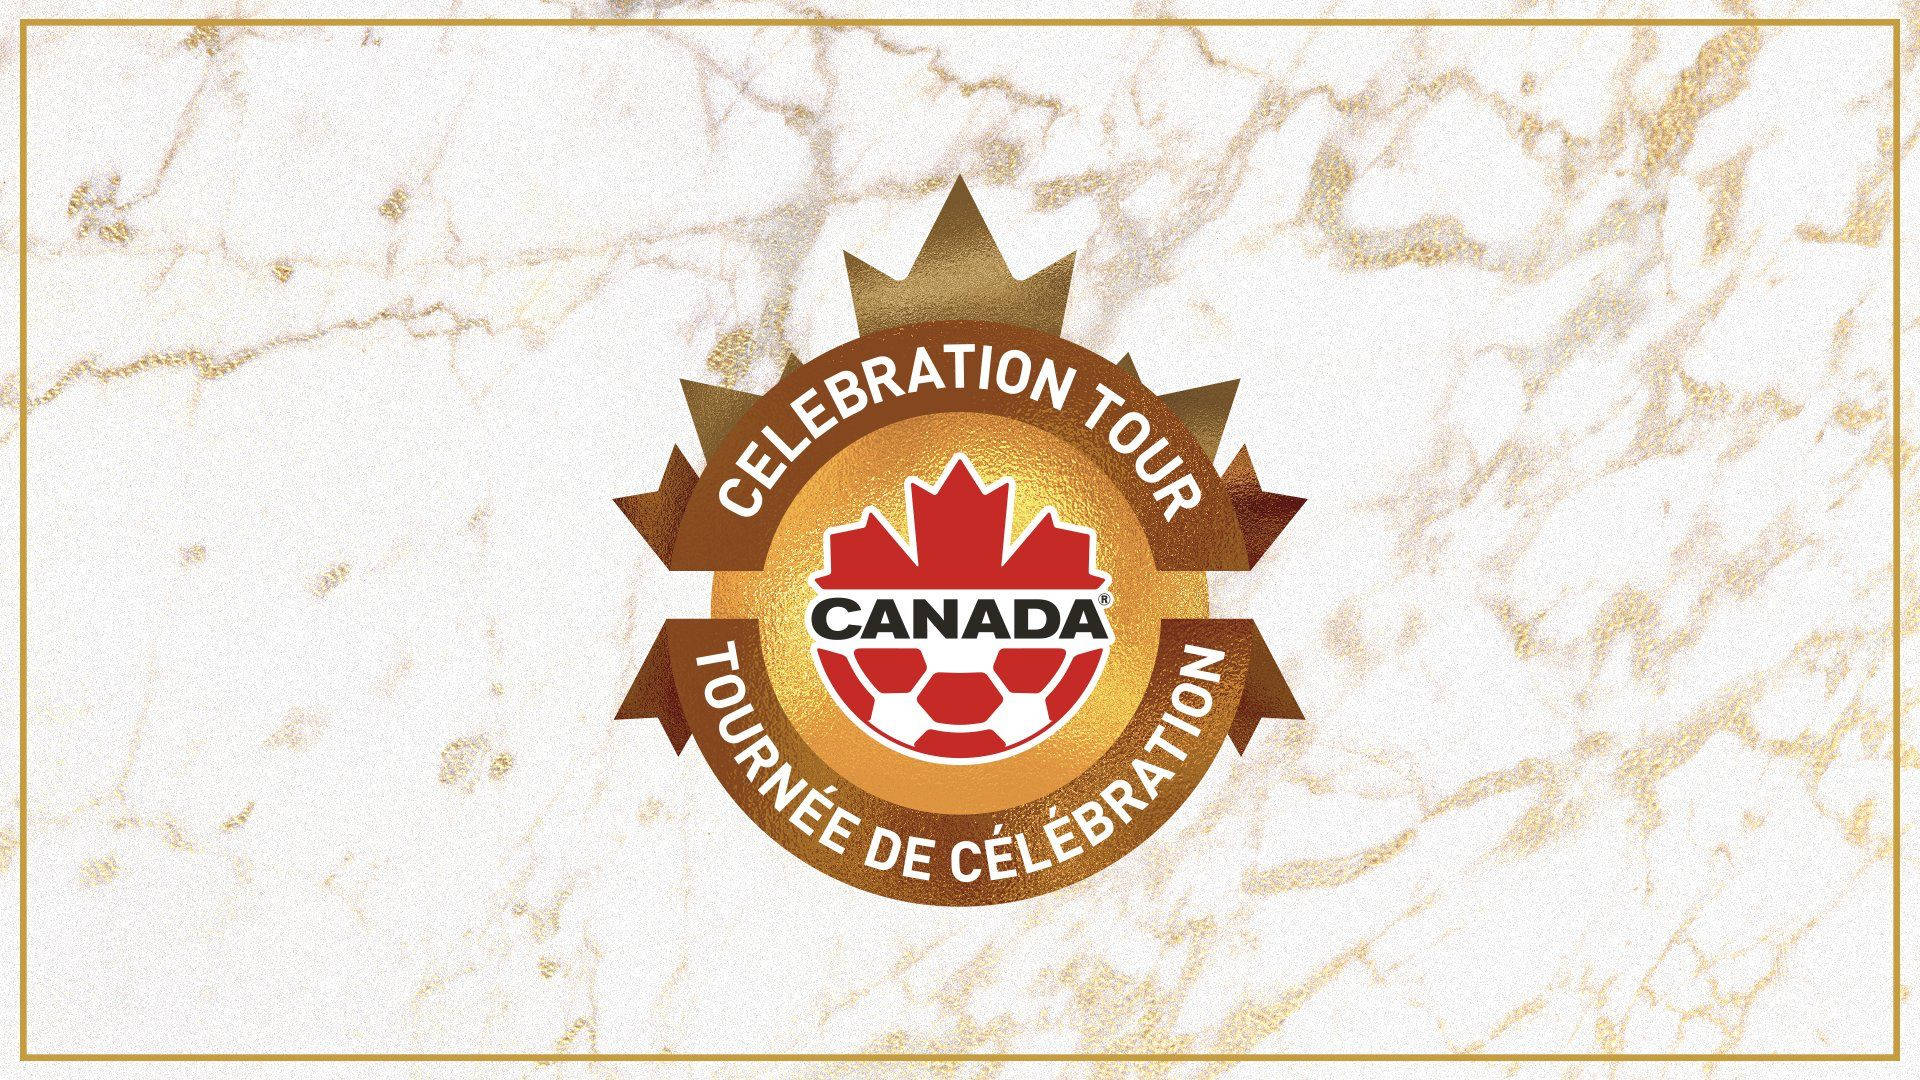 Canada National Football Team Celebration Tour Wallpaper